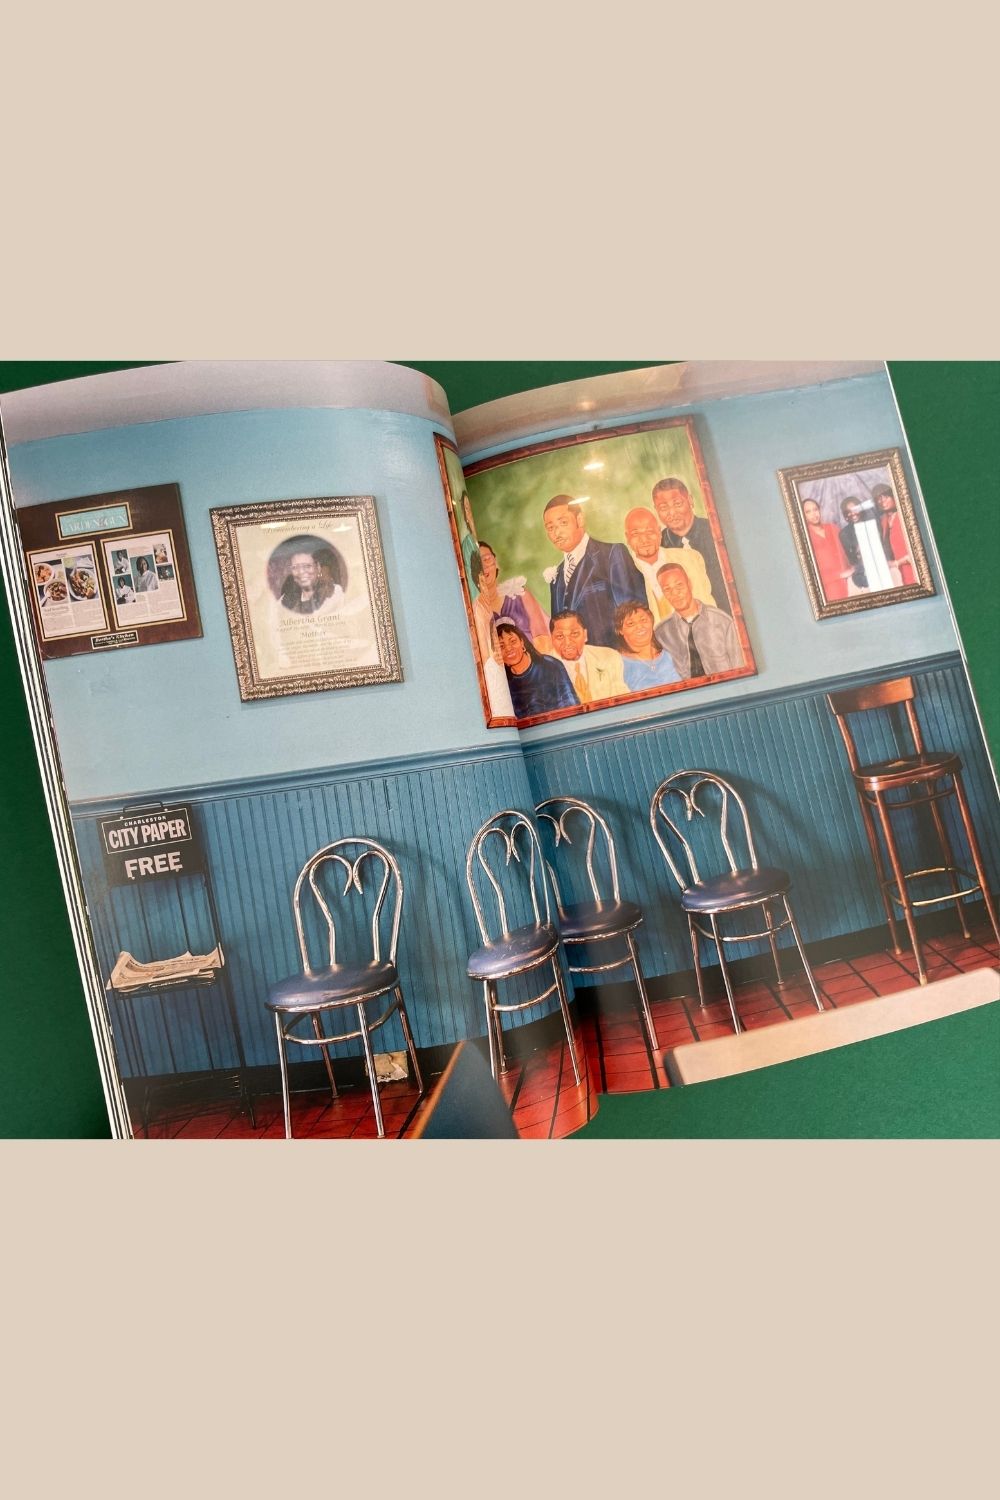 Bertha&#39;s restaurant in Issue 3 of Fare magazine